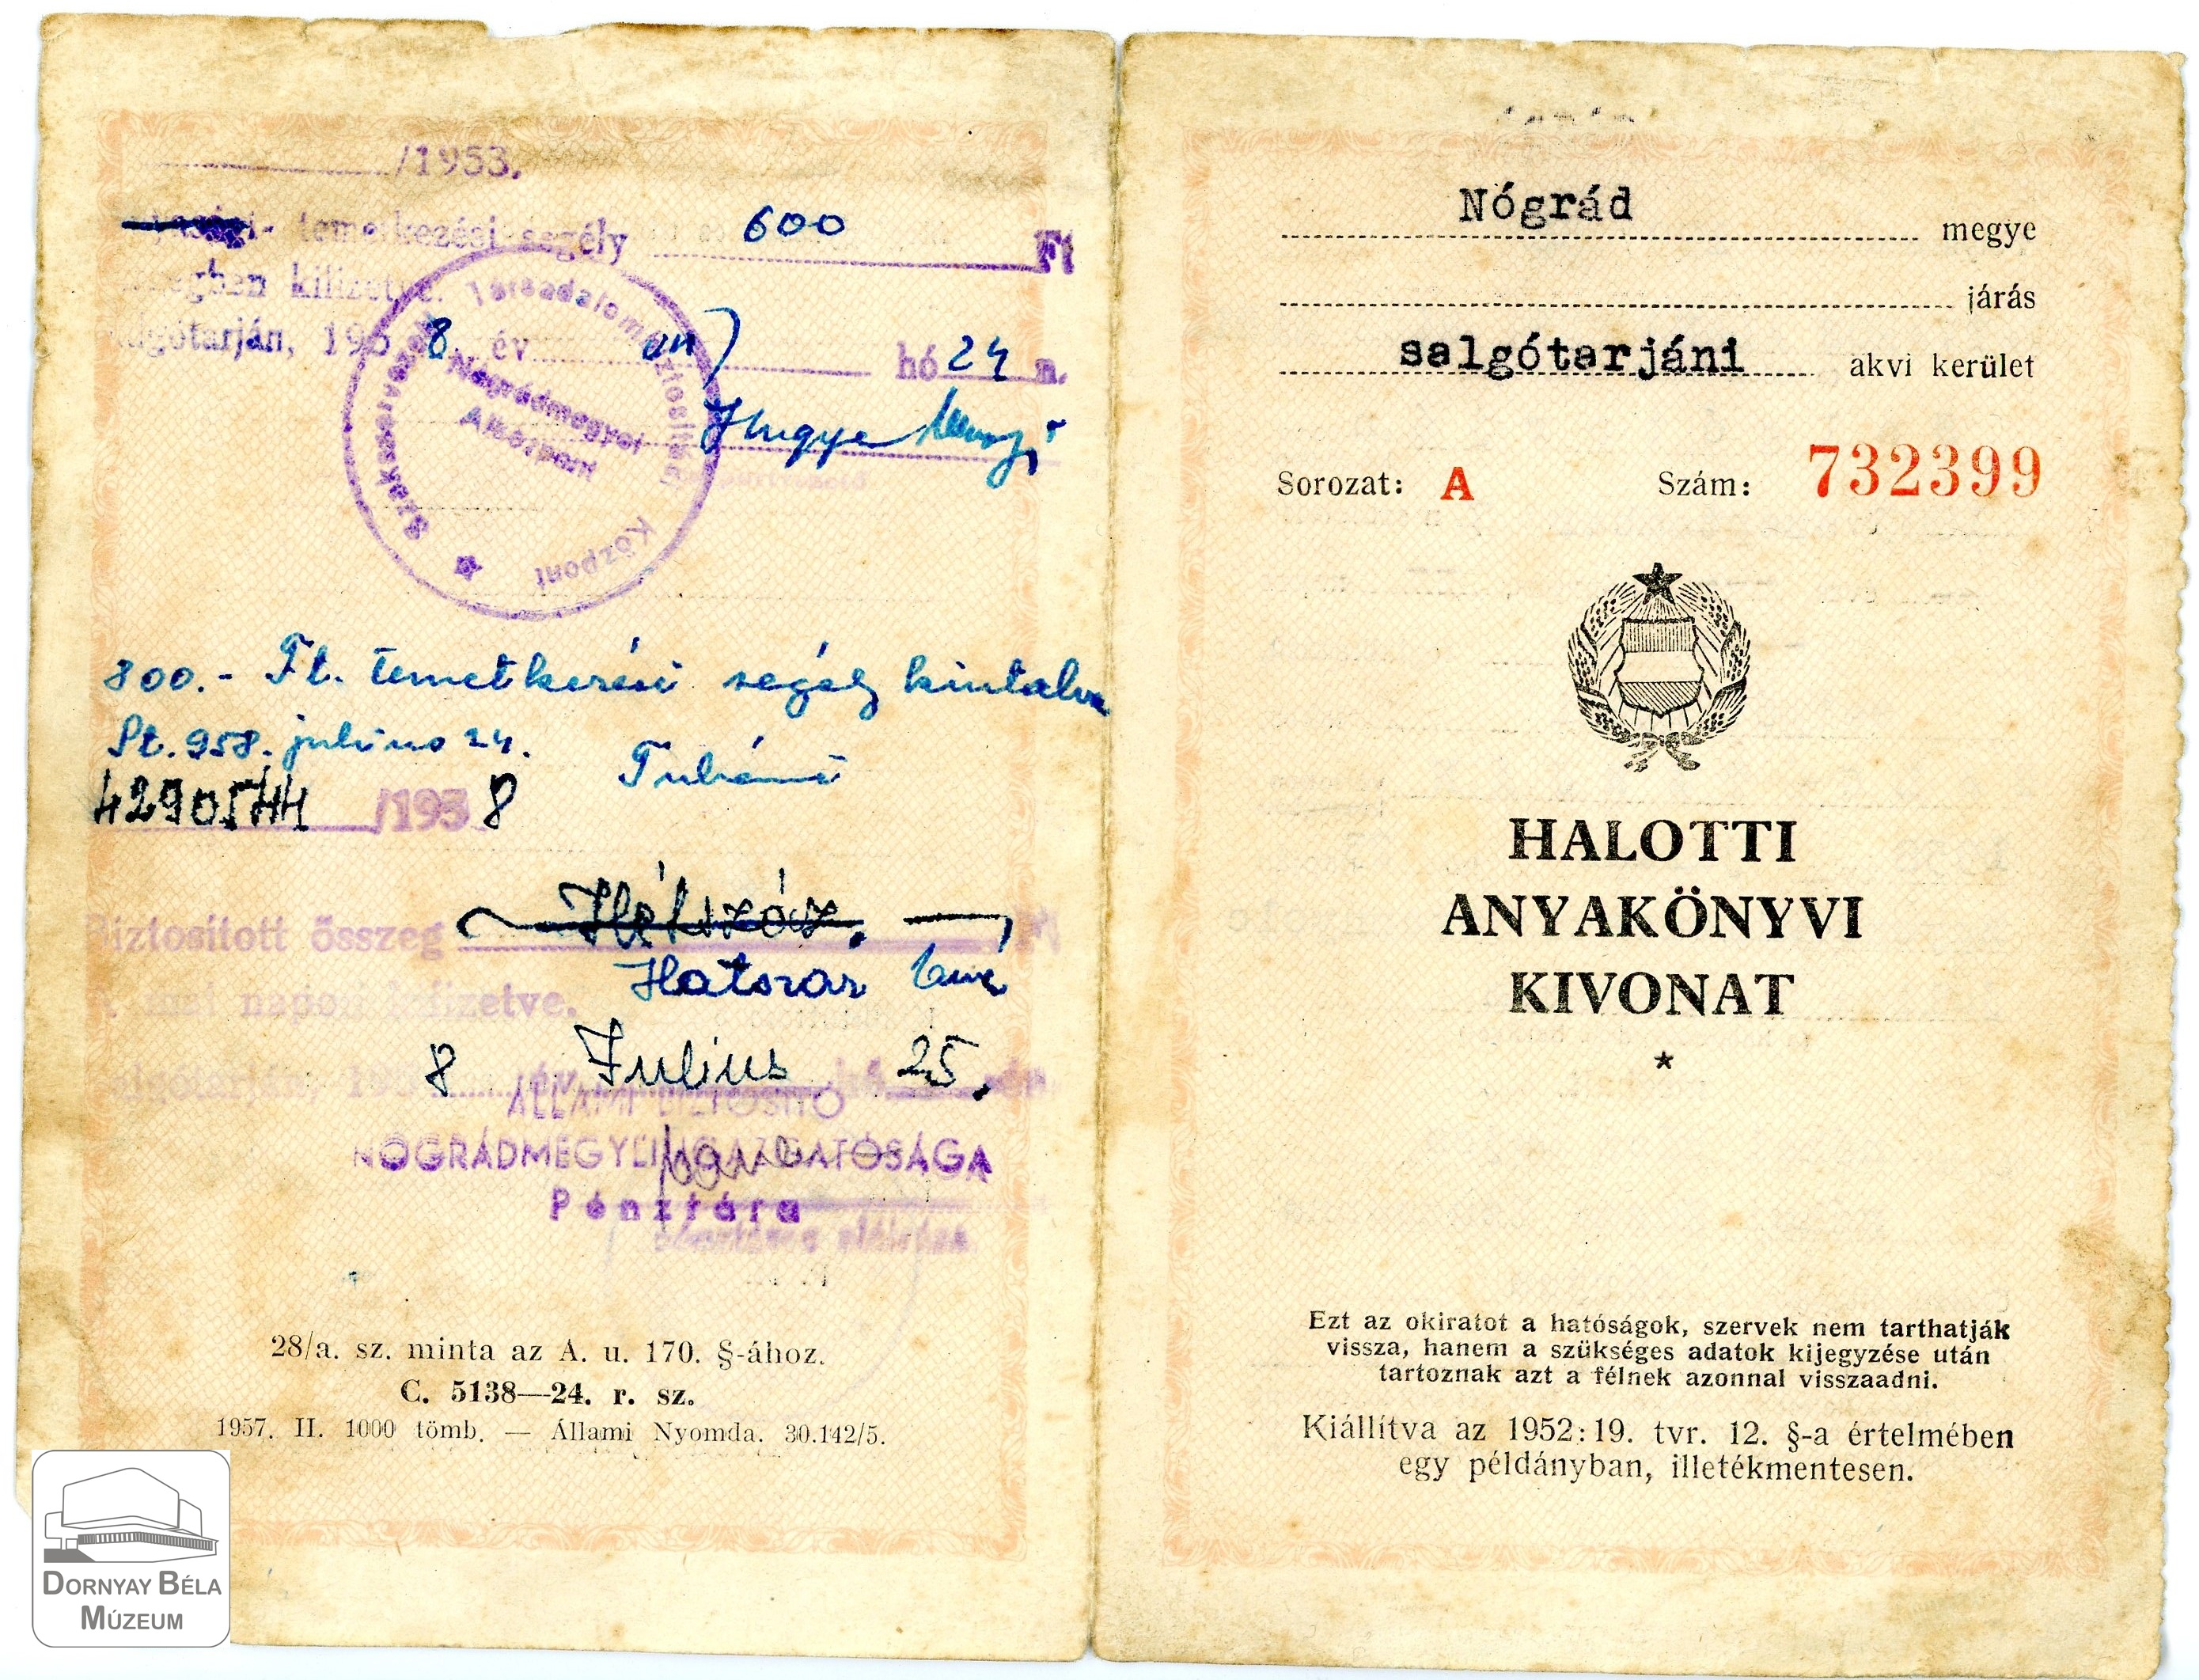 Patvaros Alajosné halotti anyakönyvi kivonata (Dornyay Béla Múzeum, Salgótarján CC BY-NC-SA)